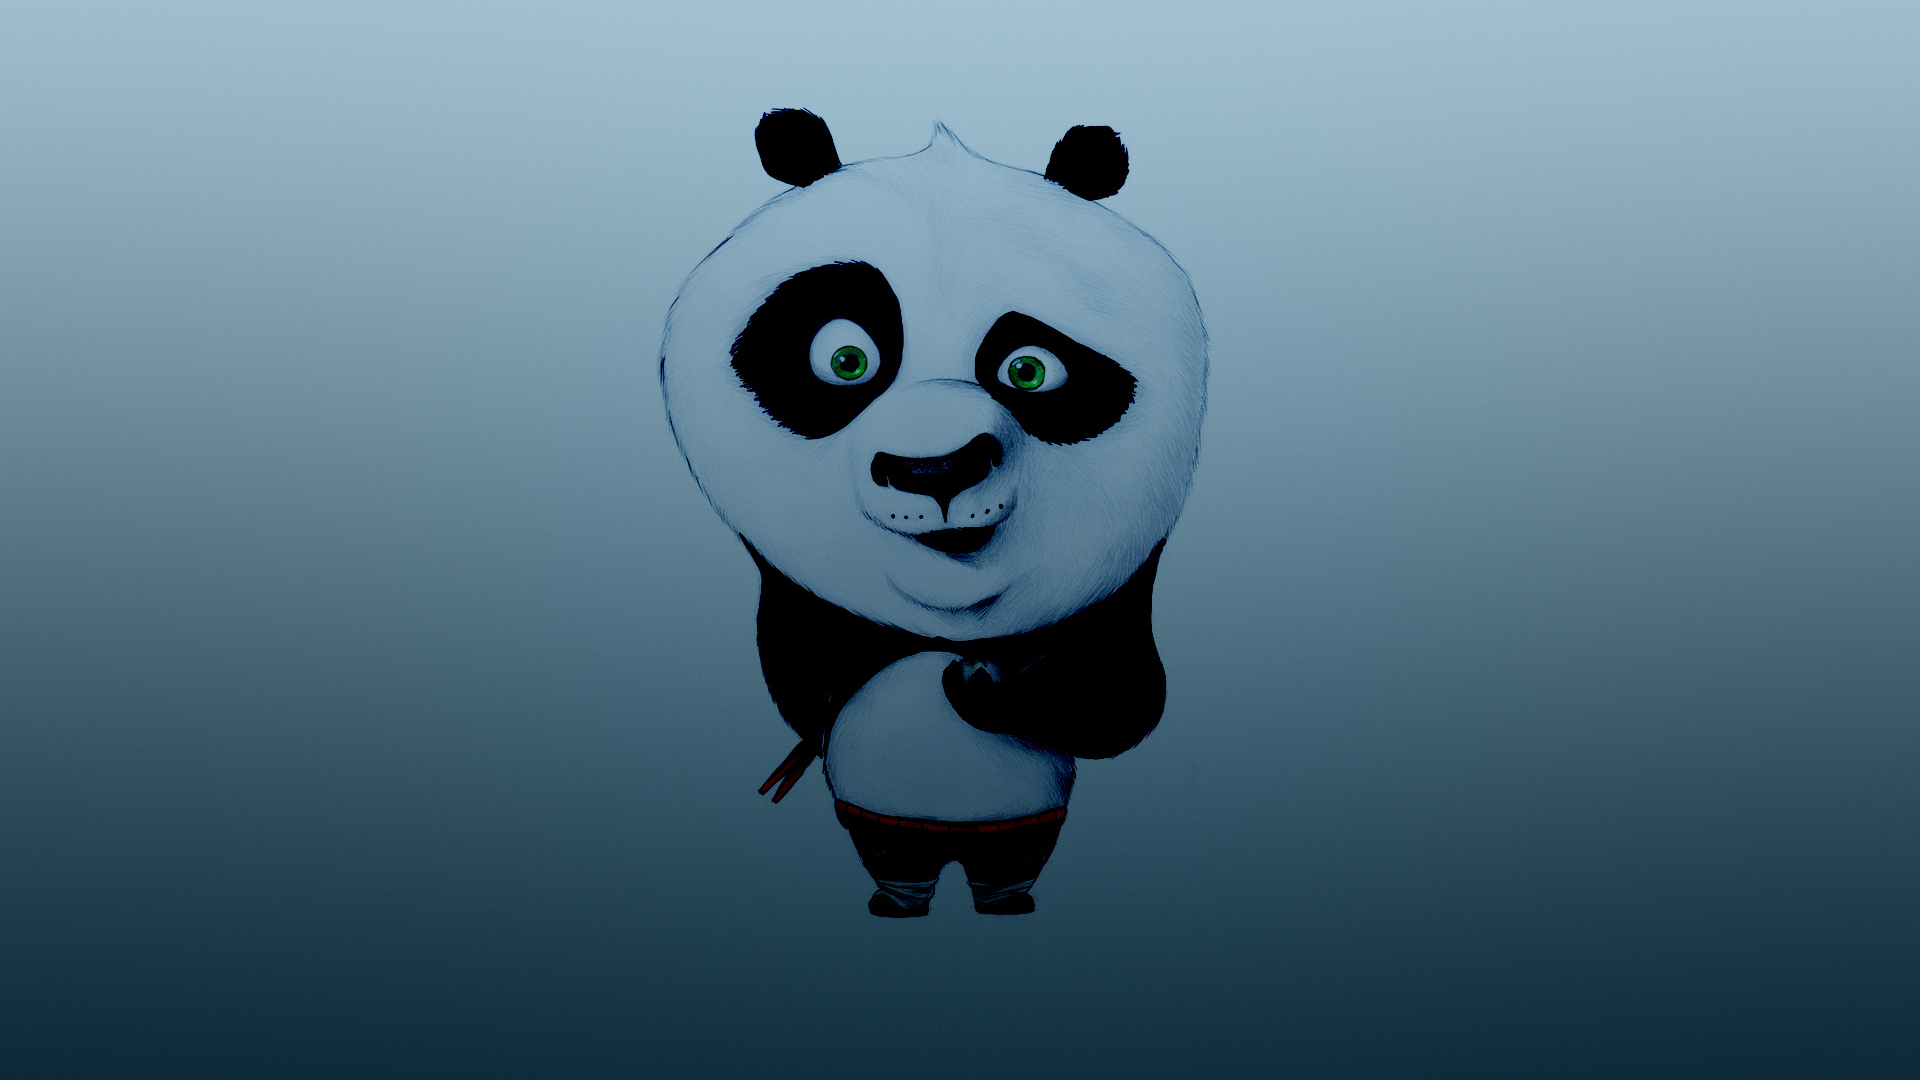 темно синий, Кунг-фу панда, kung fu panda, палочки, пельмень